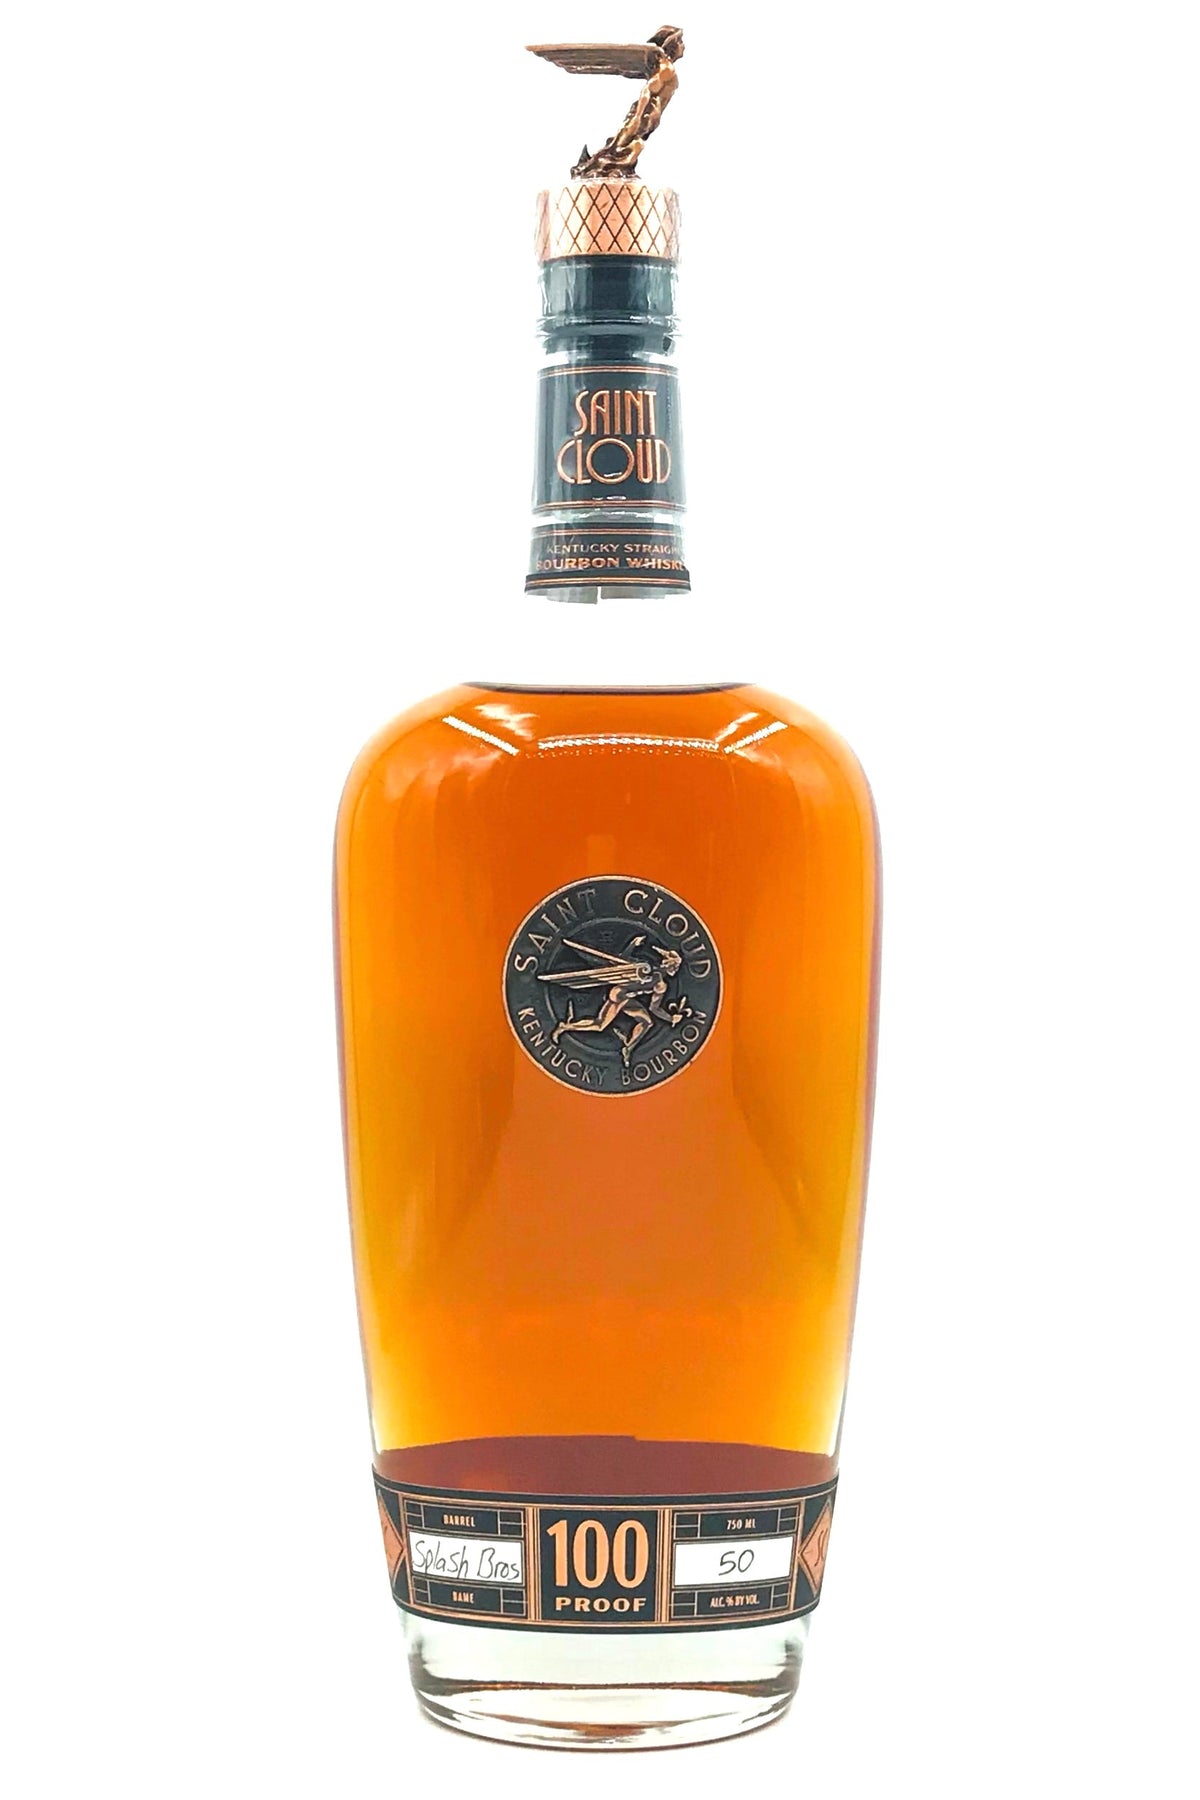 Saint Cloud Single Barrel 100 Proof Bourbon Whiskey